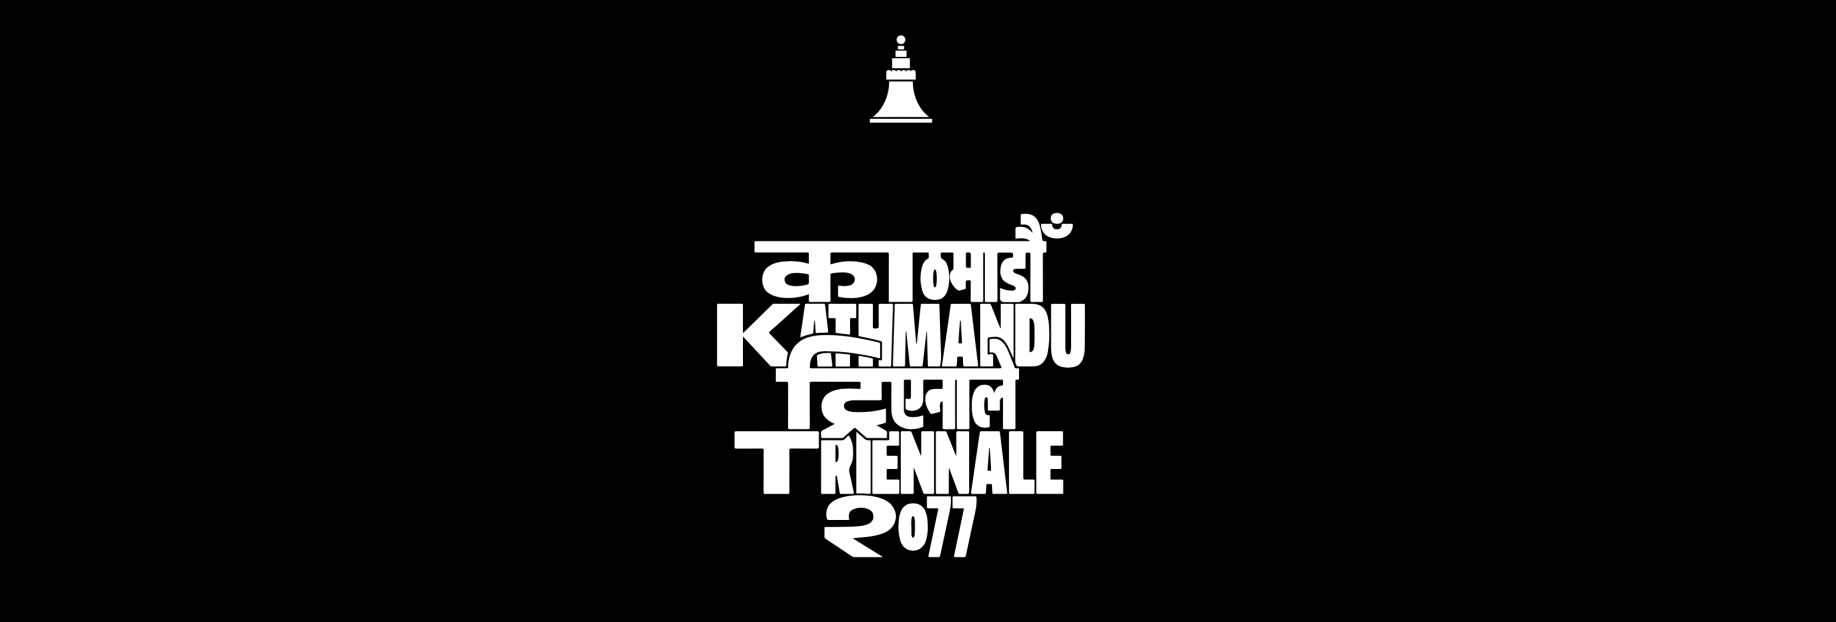 Kathmandu triennale 2077